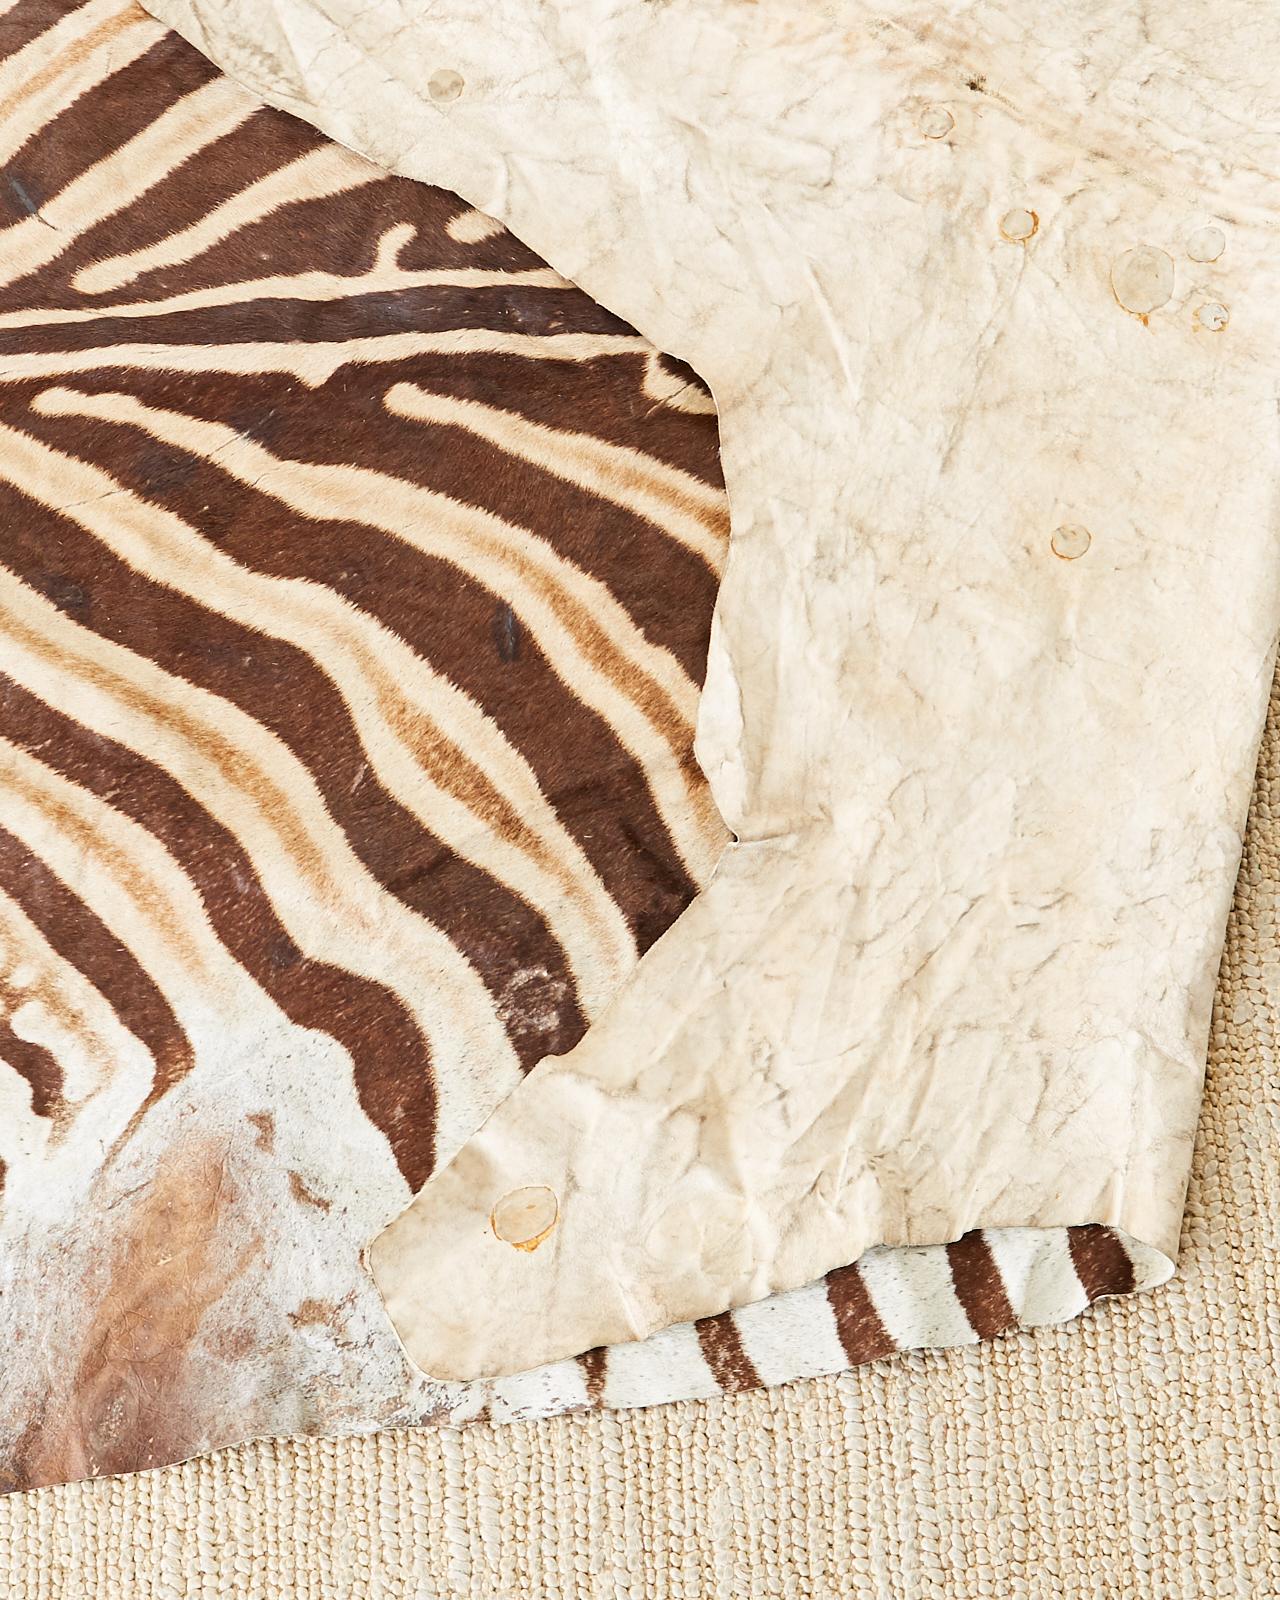 Authentic African Zebra Hide Carpet Rug 11